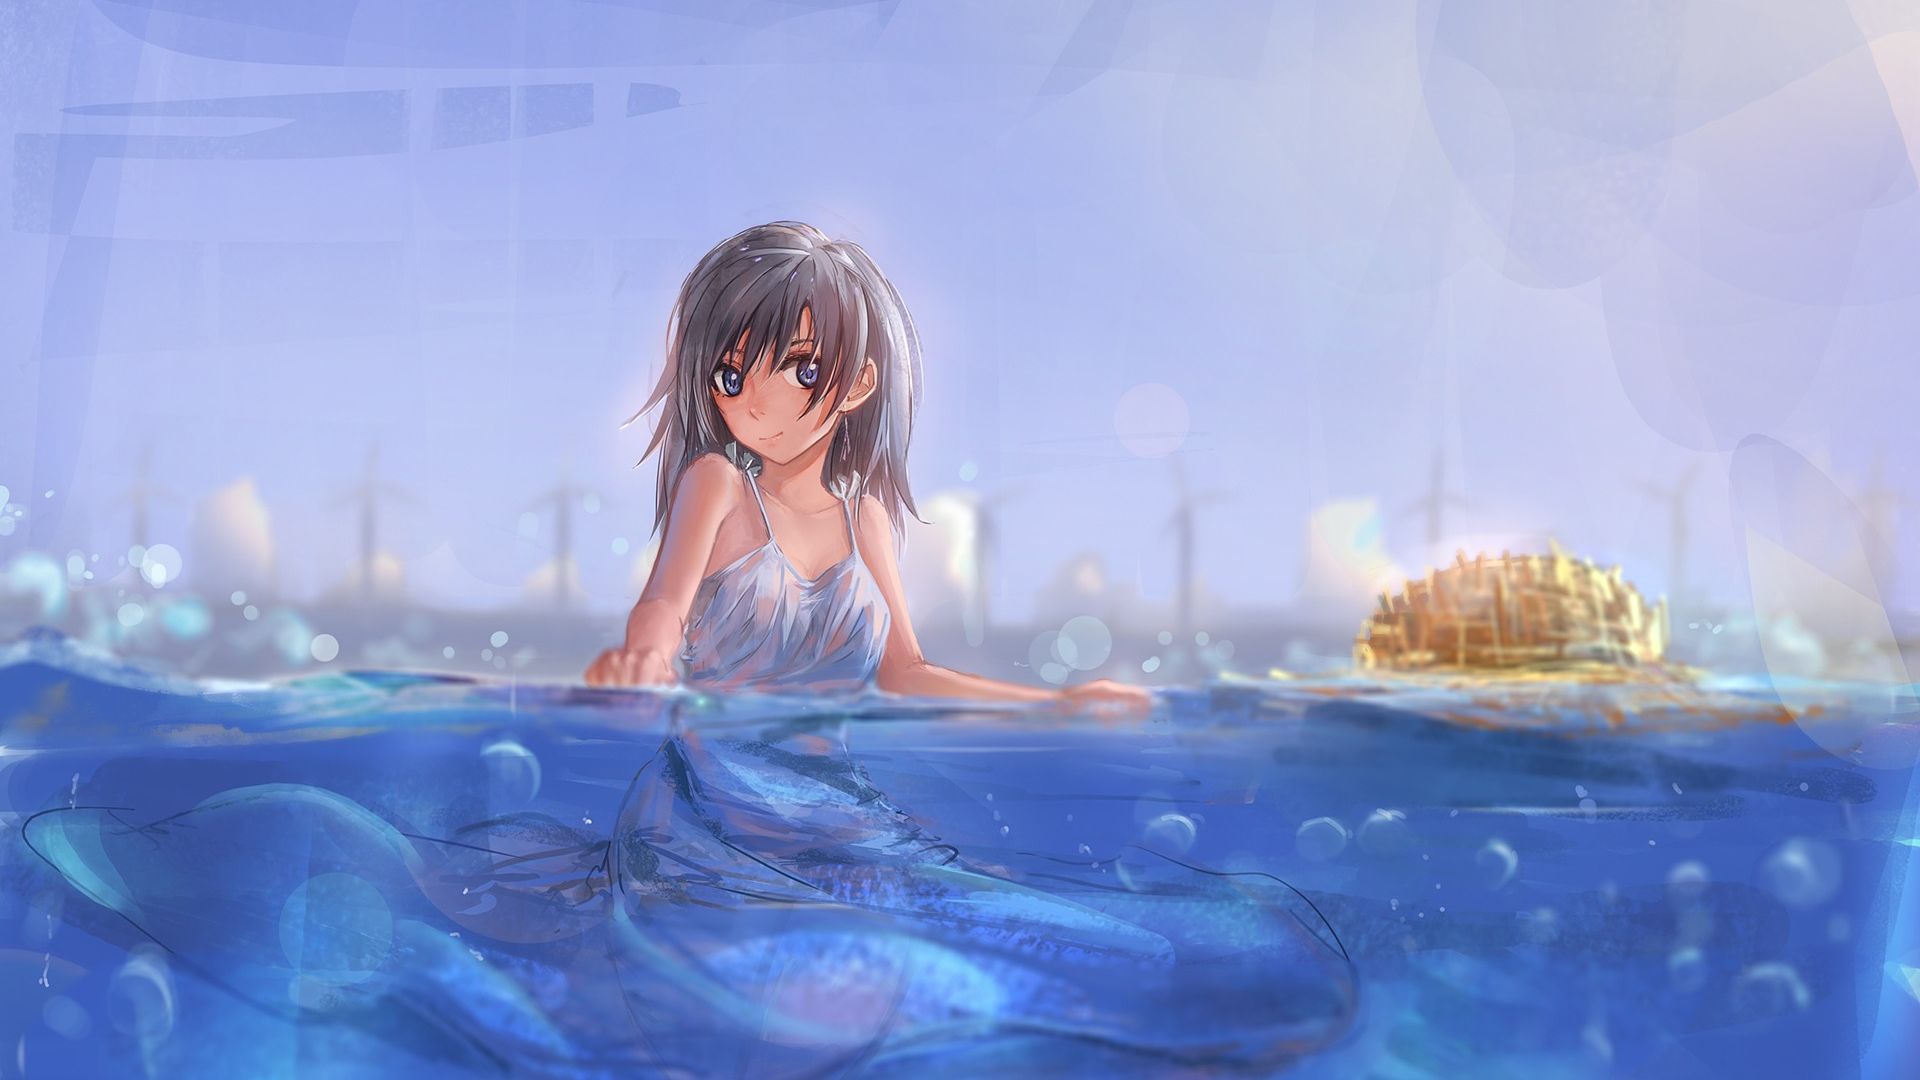 Desktop Wallpaper Anime Girl In Water, Hd Image, Picture, Background, Xcu 0j